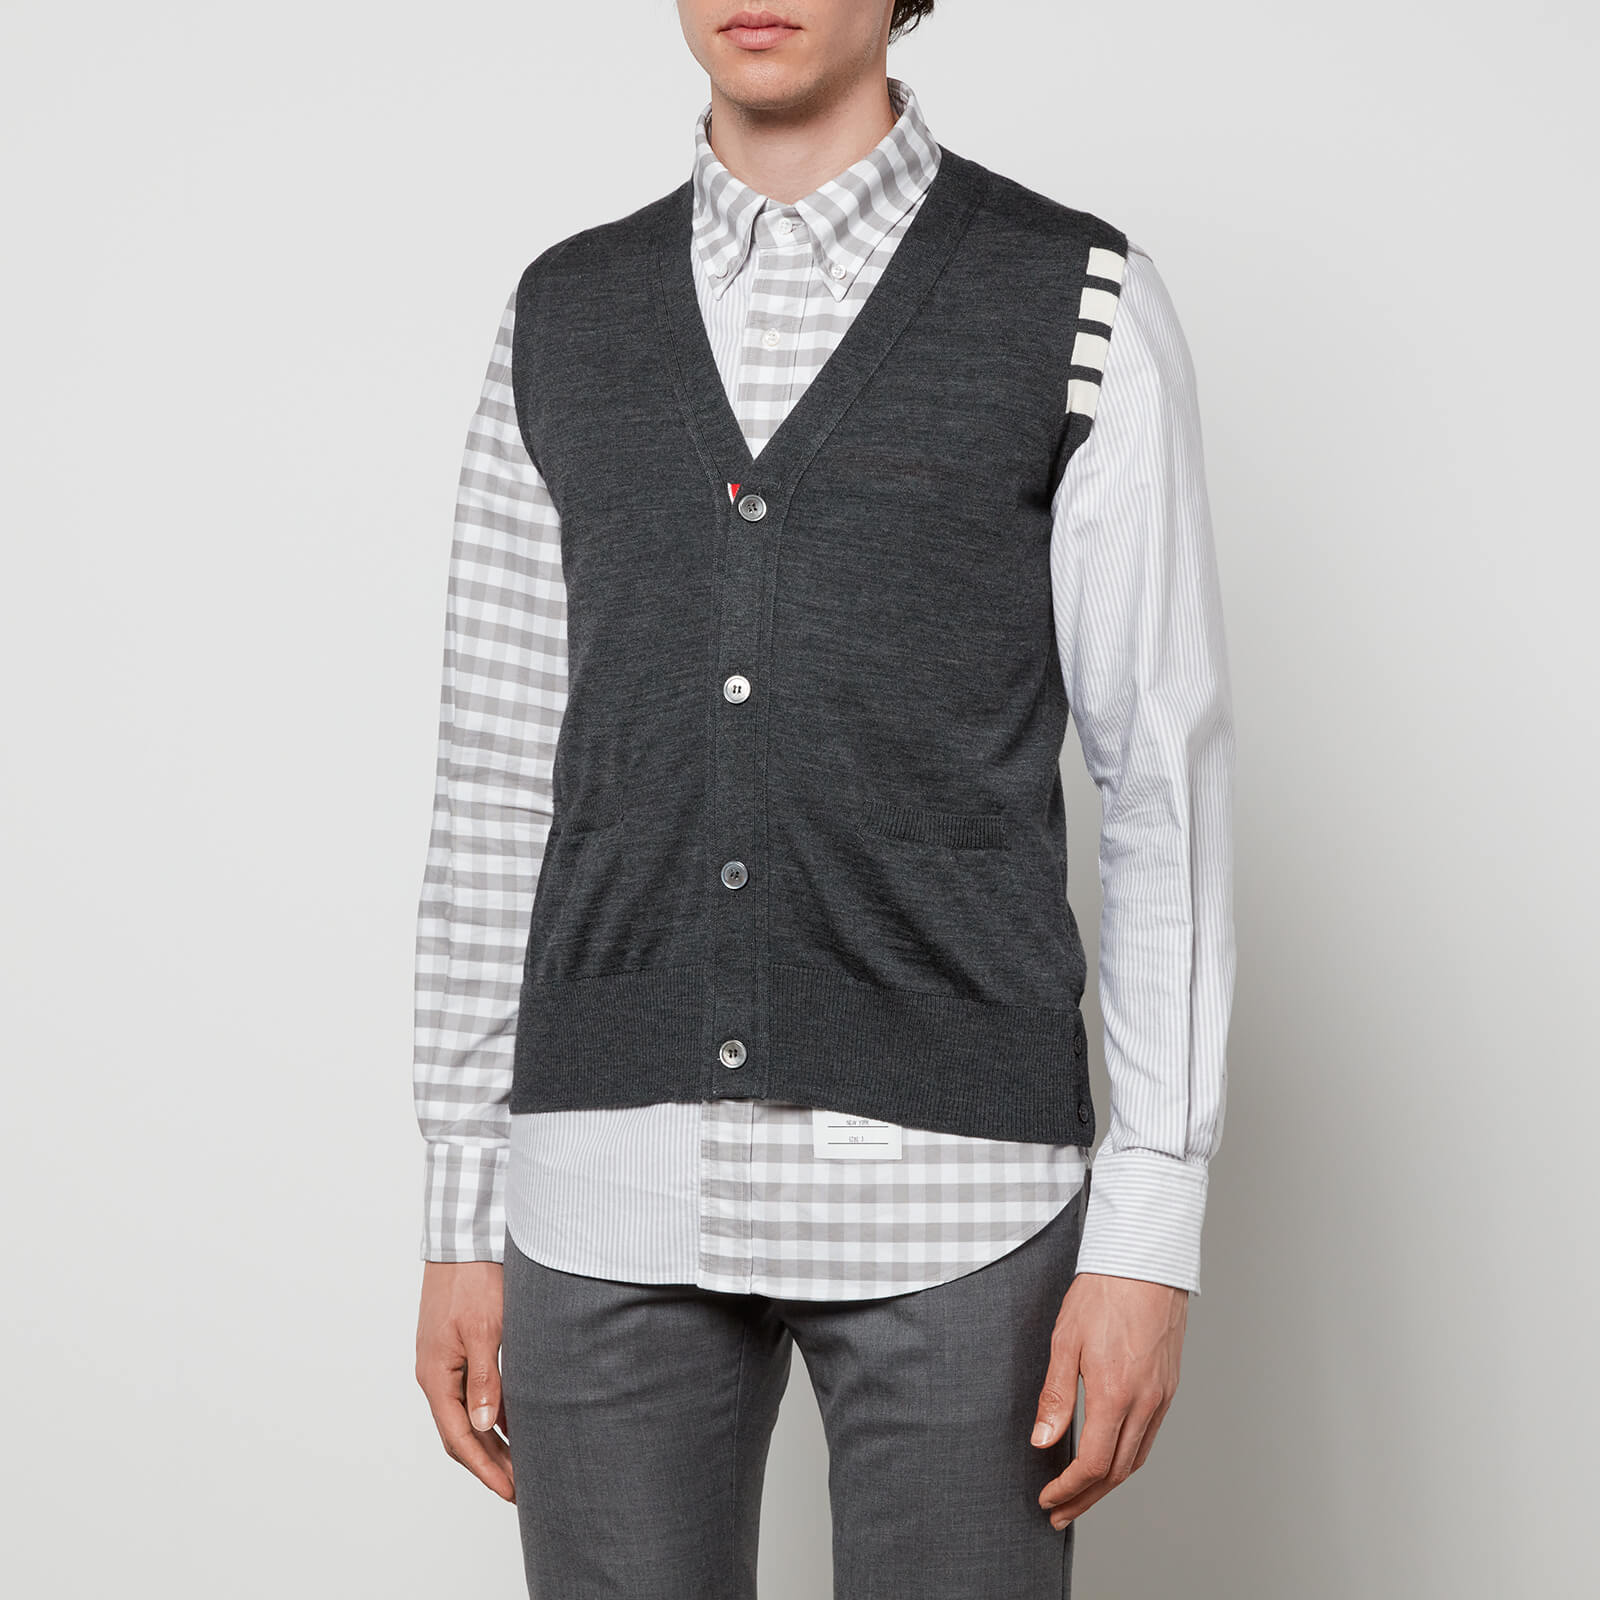 thom browne men's 4-bar classic v-neck knit vest - dark grey - 5/xxl